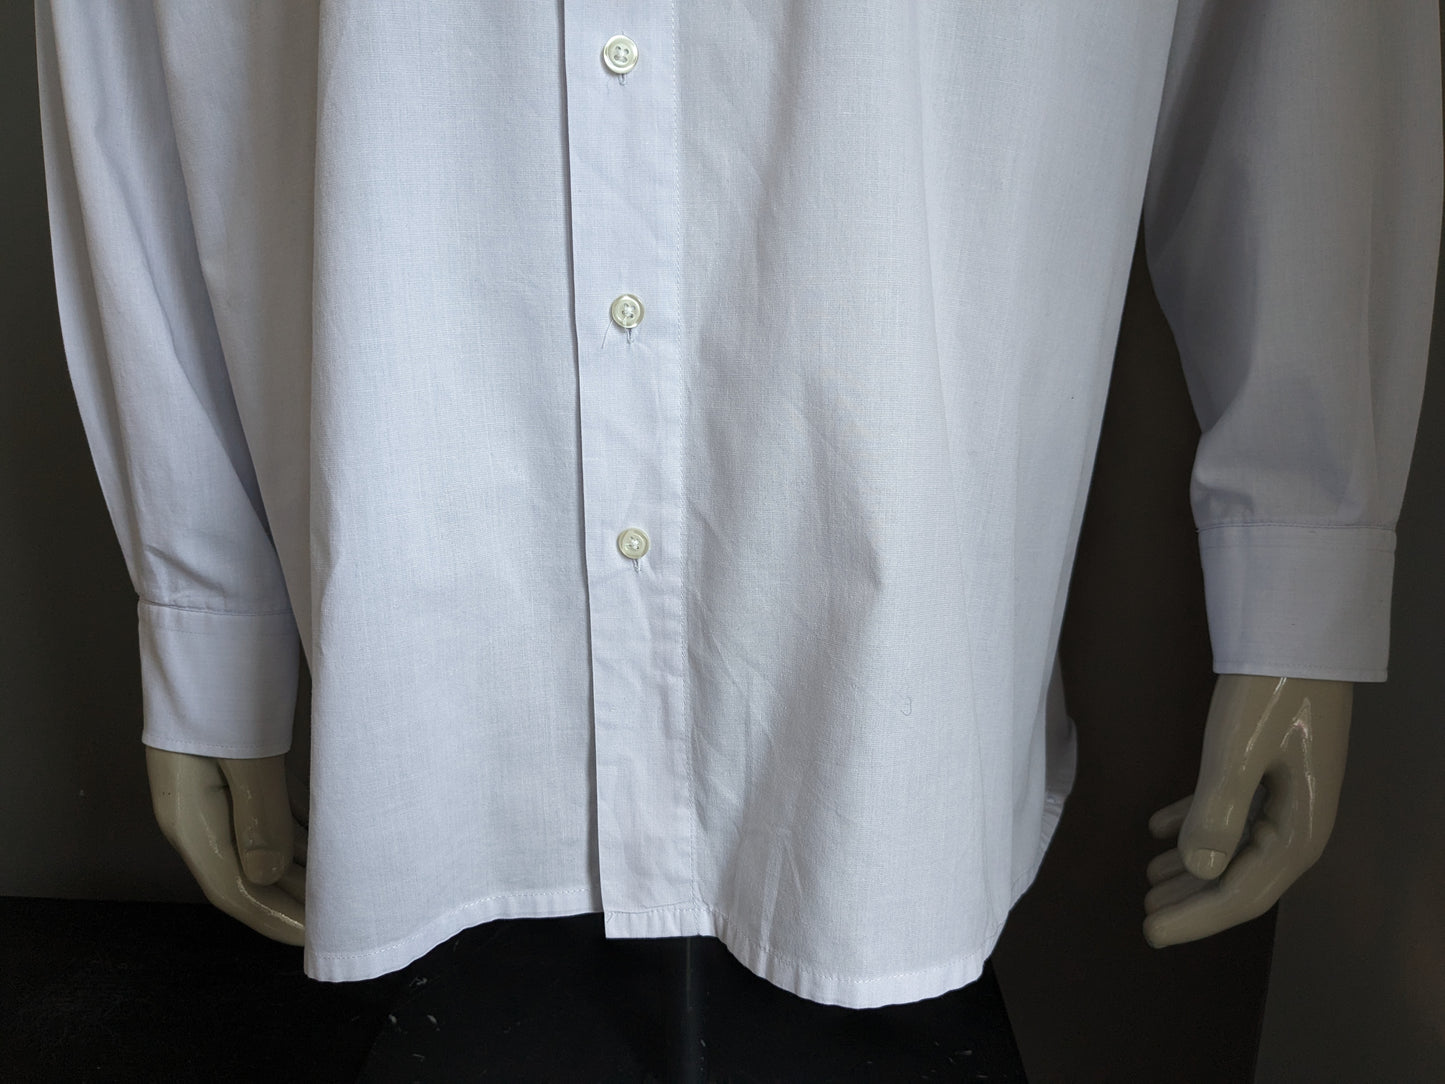 Vintage designer's shirt. White. Size 2XL / XXL.